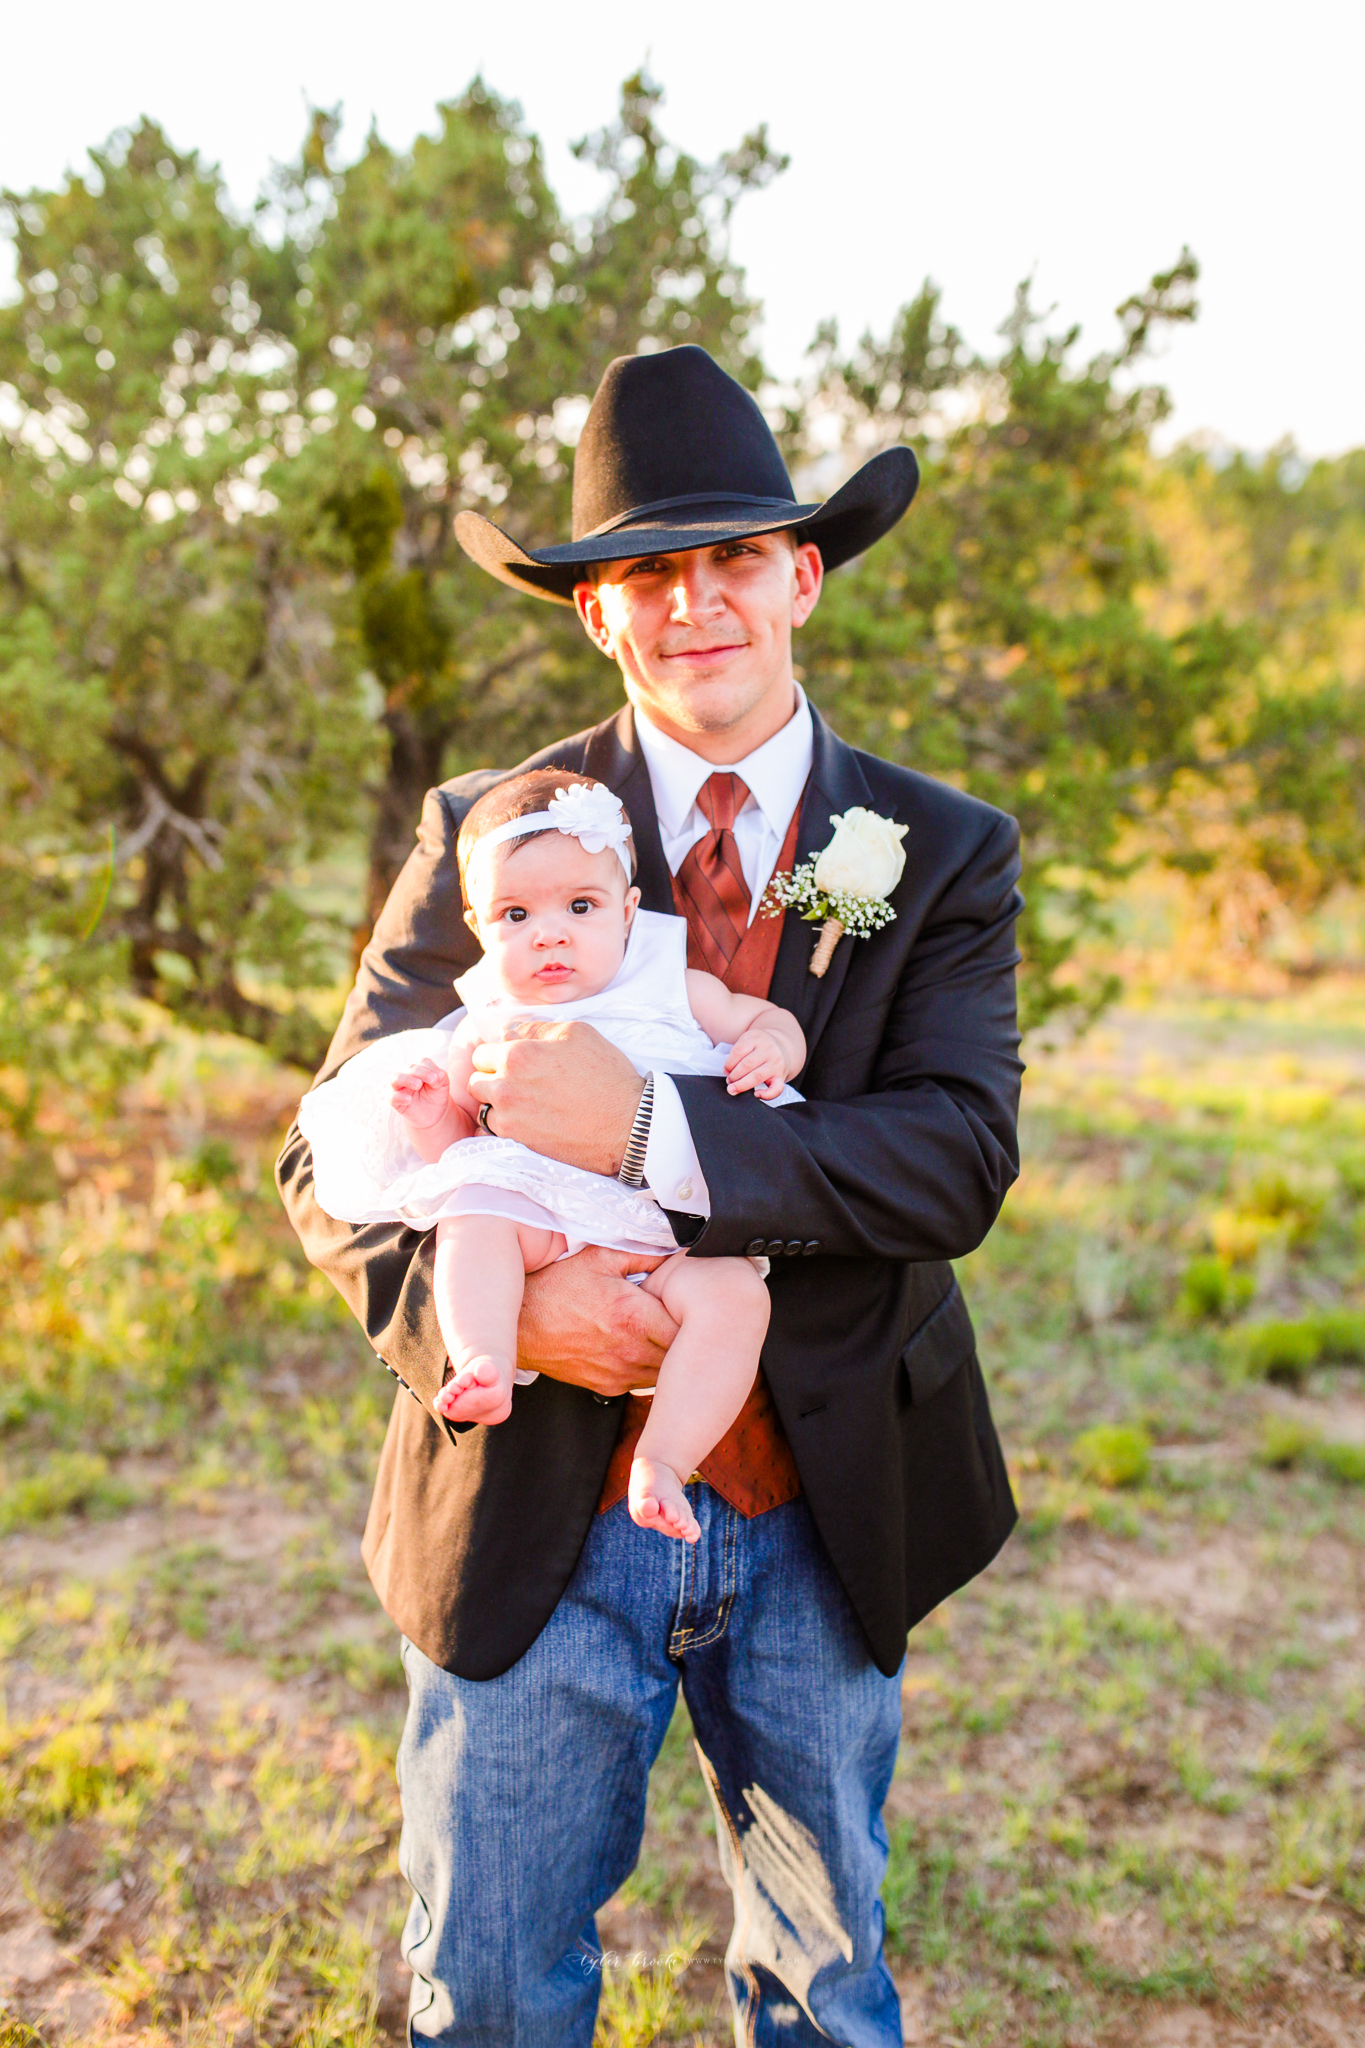 Edgewood New Mexico_Country Wedding Photographer_www.tylerbrooke.com_Kate Kauffman (32 of 35)